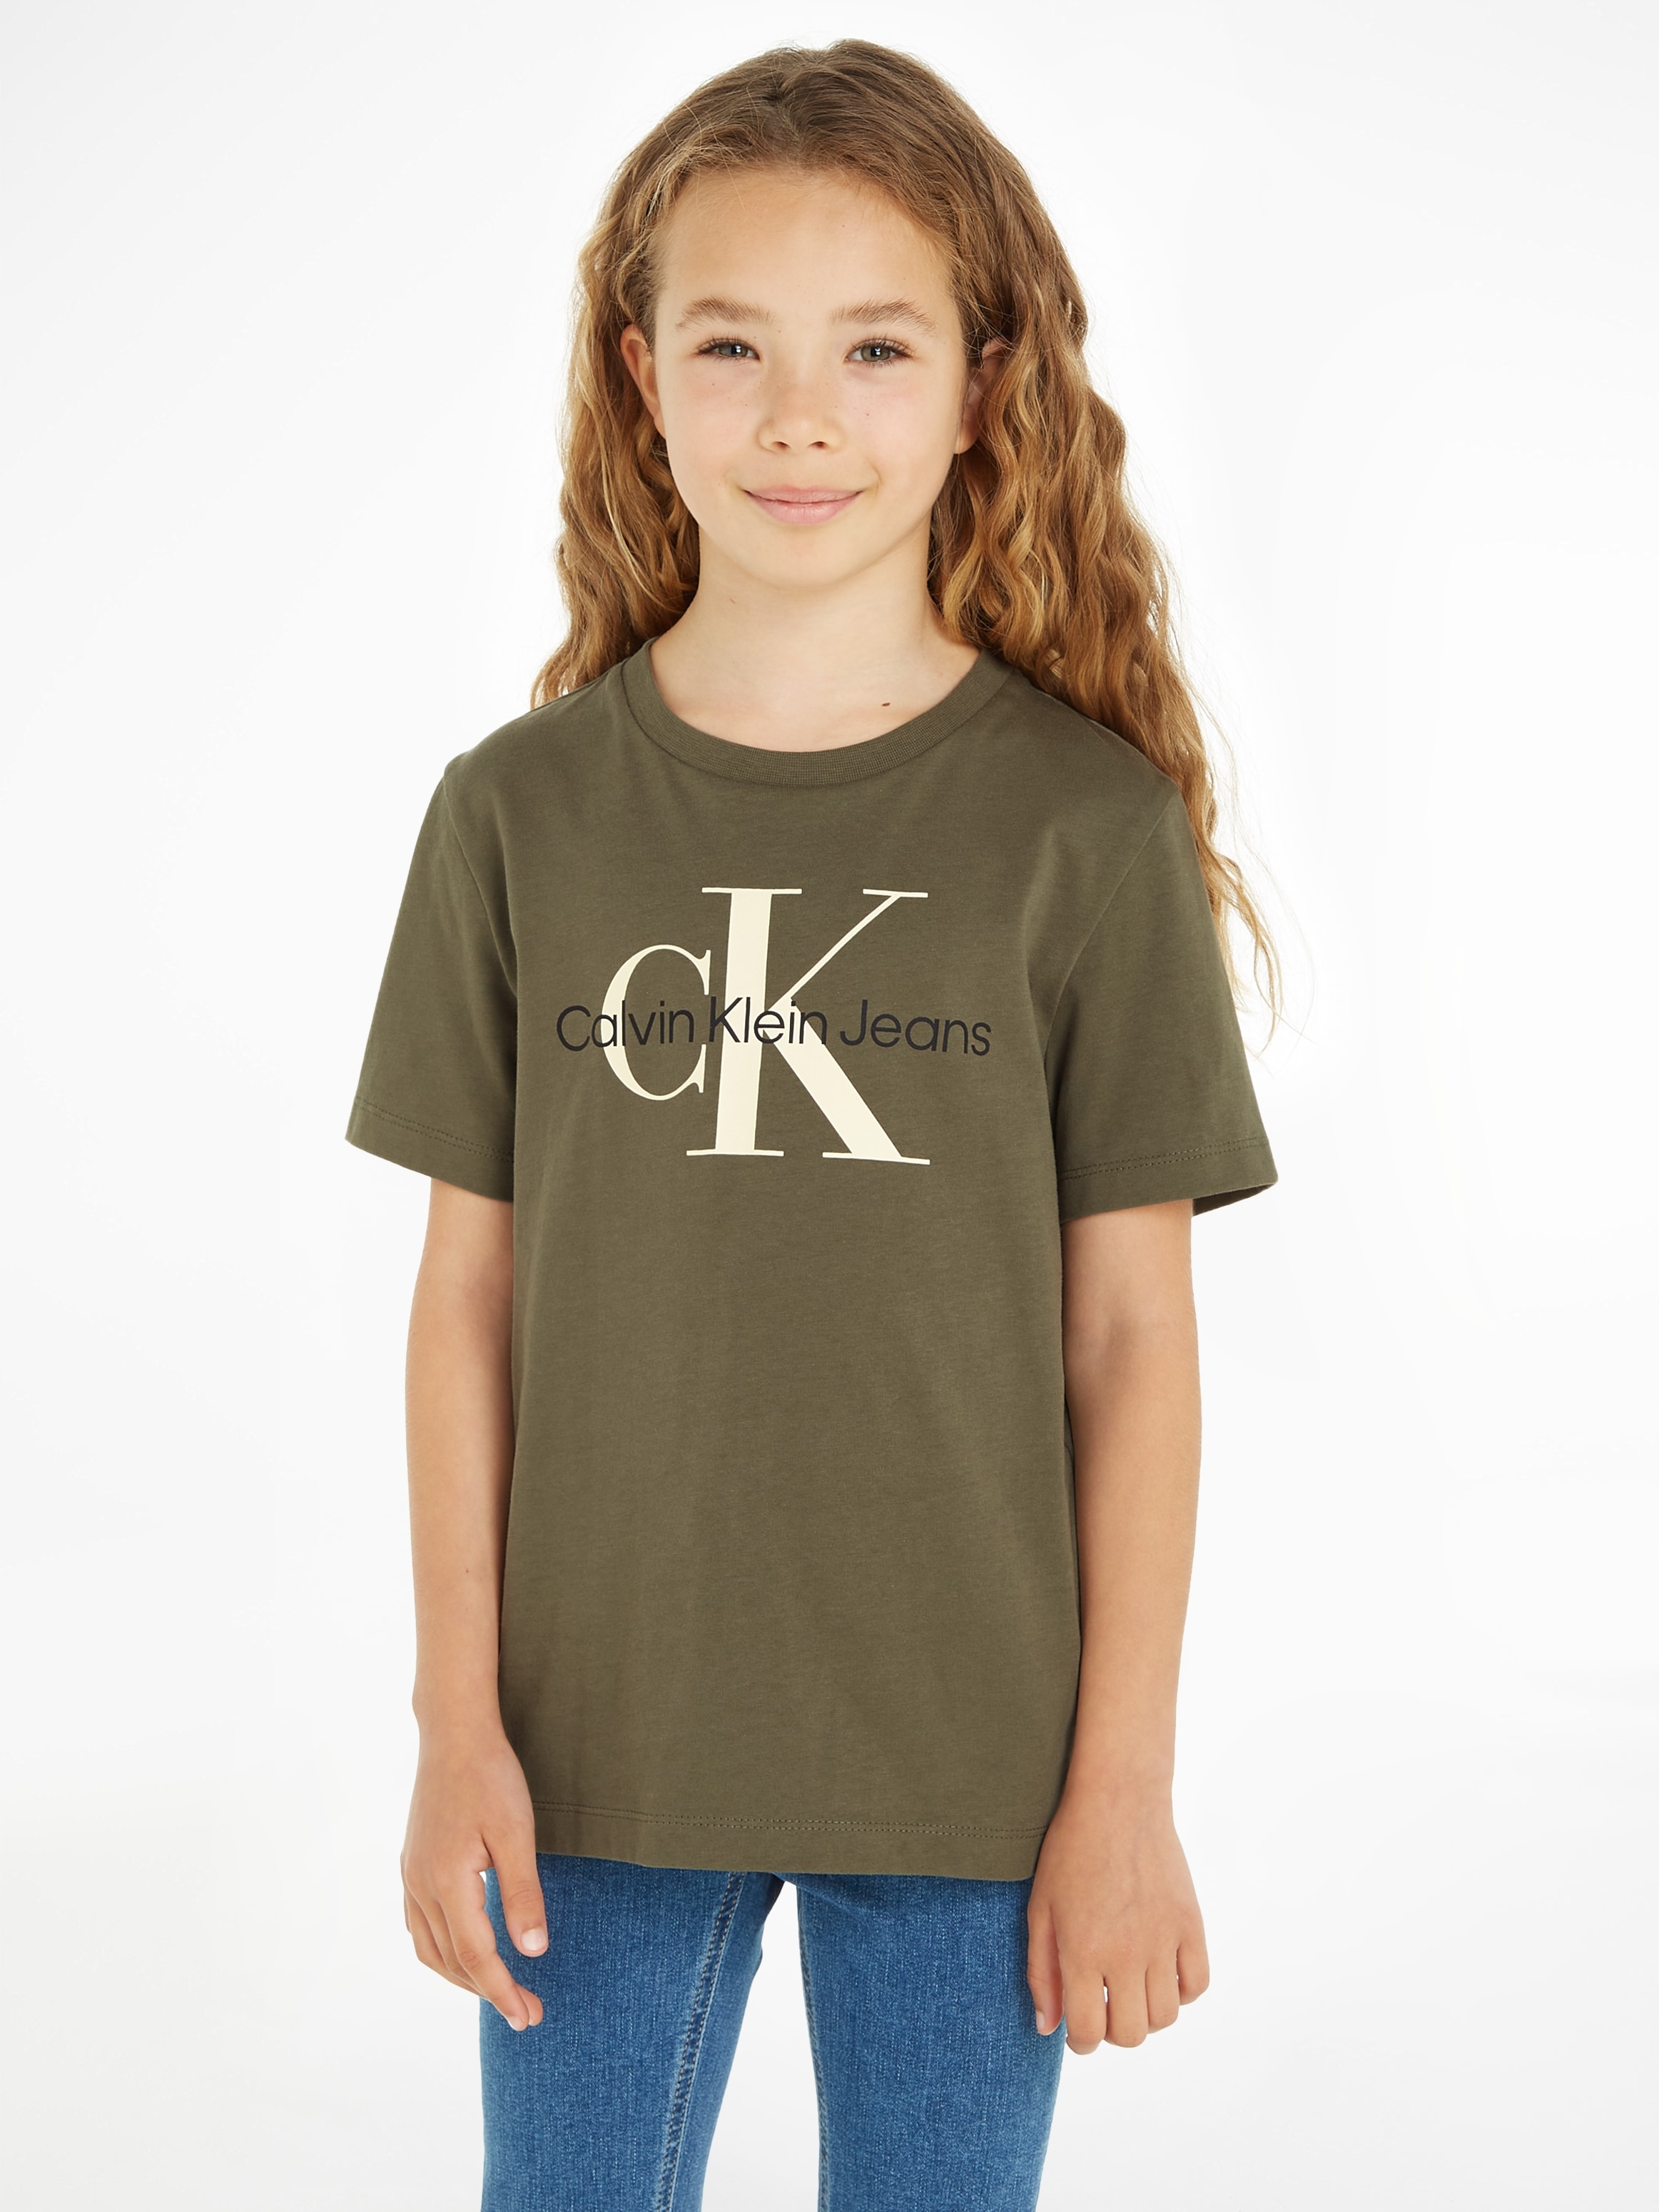 SS Klein T-SHIRT« Calvin T-Shirt »CK MONOGRAM BAUR Jeans |